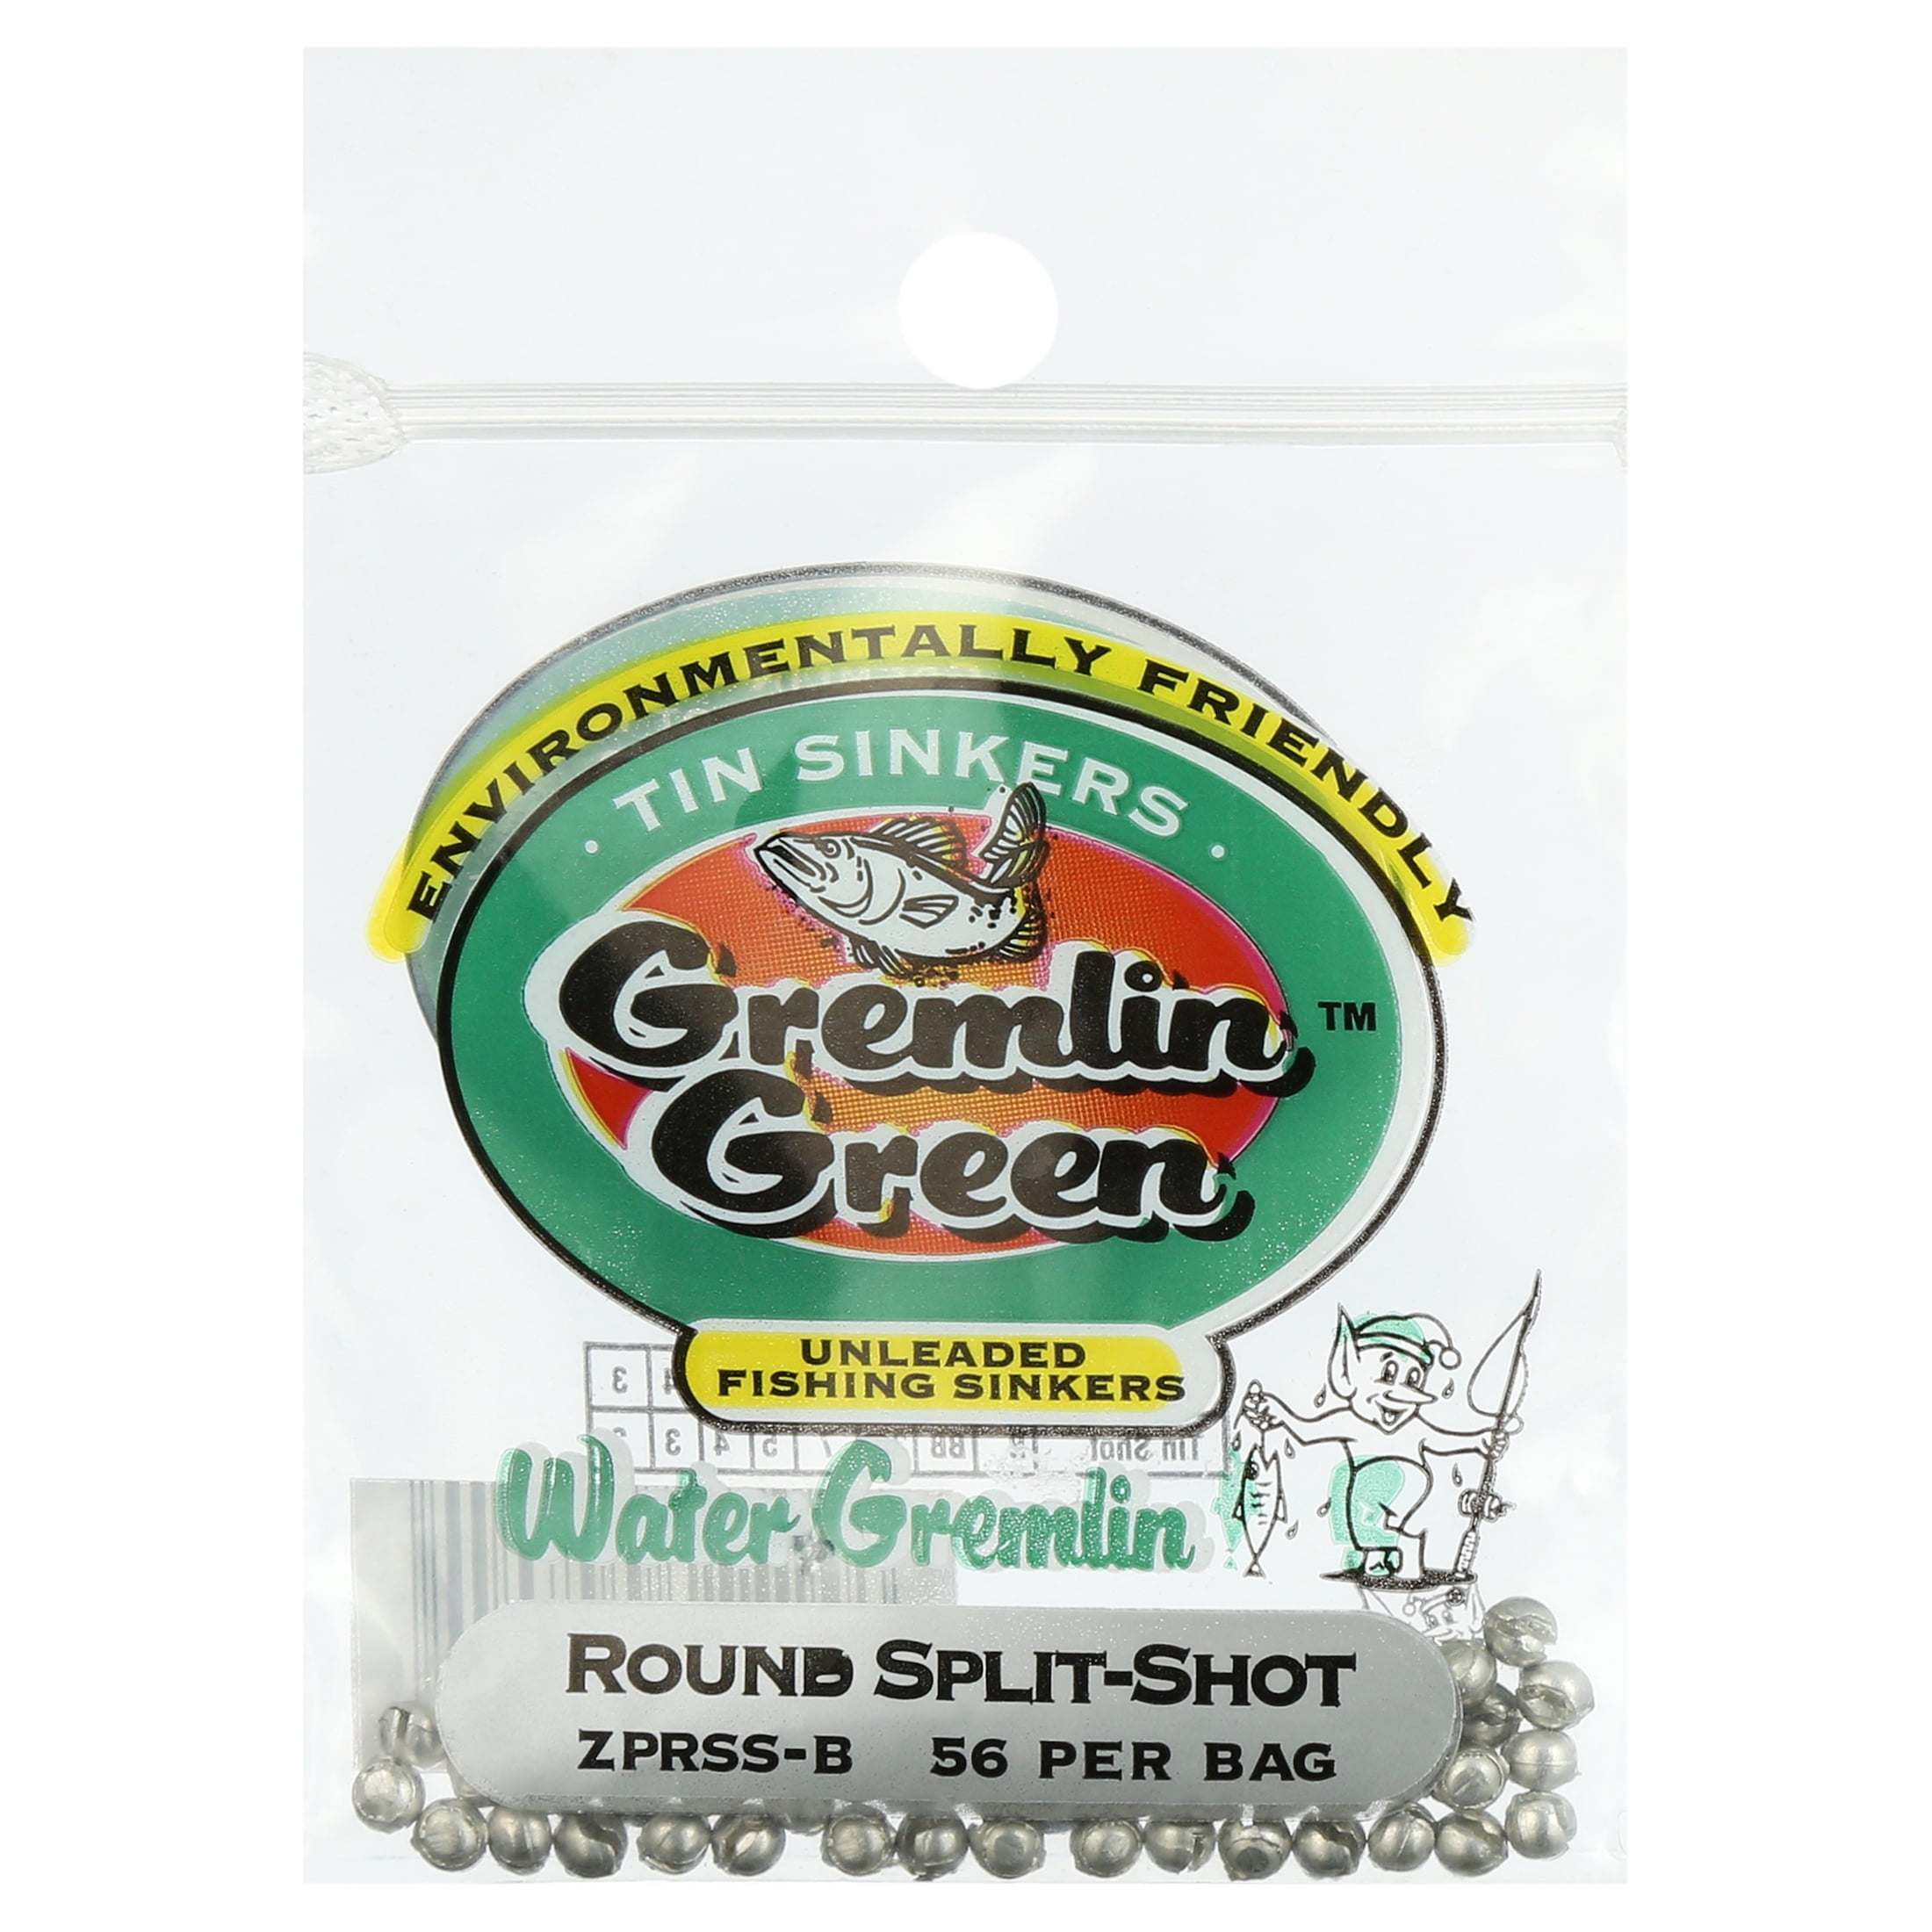 Water Gremlin Green/Tin Round Split Shot Sinker, ZPRSS-B, Size B